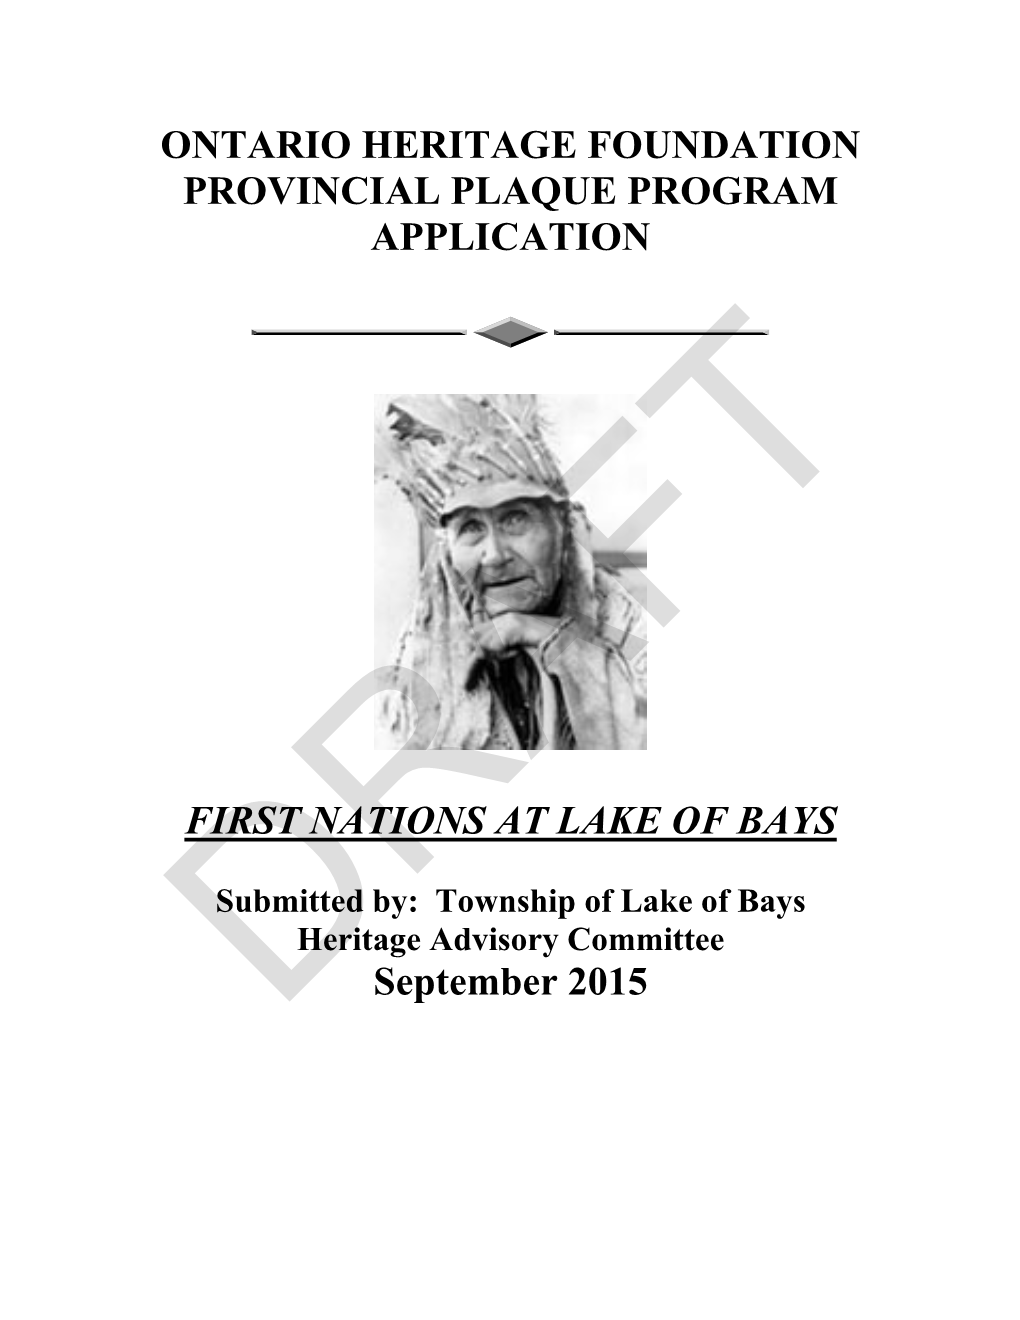 Ontario Heritage Foundation Provincial Plaque Program Application